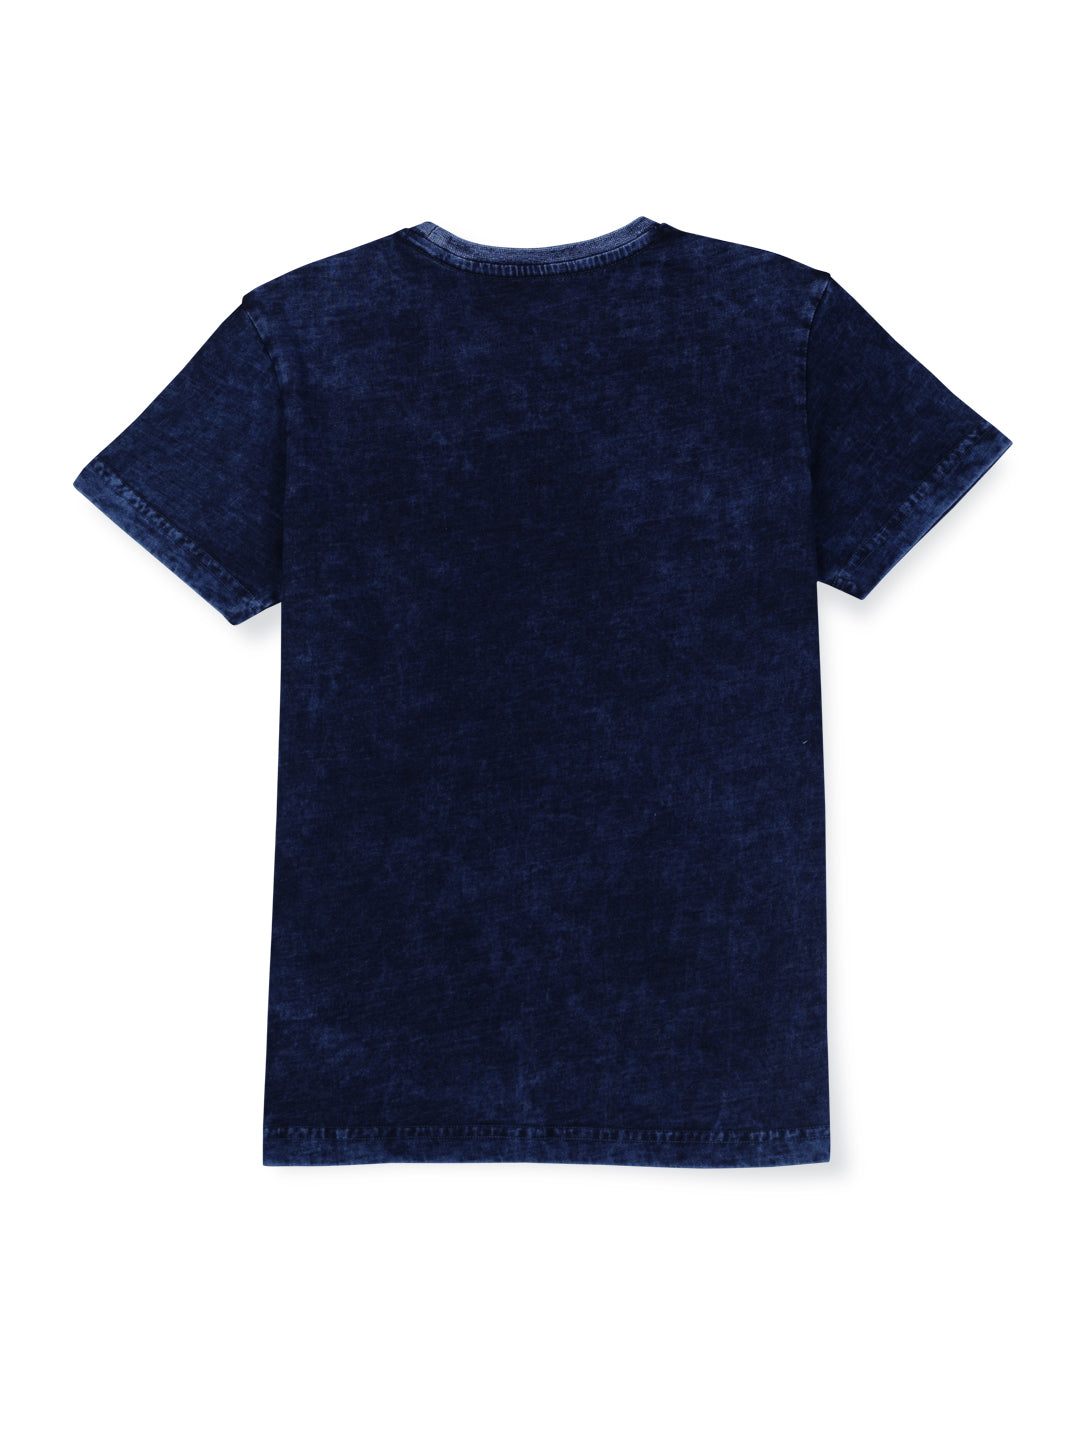 Boys Blue Cotton Solid T-Shirt